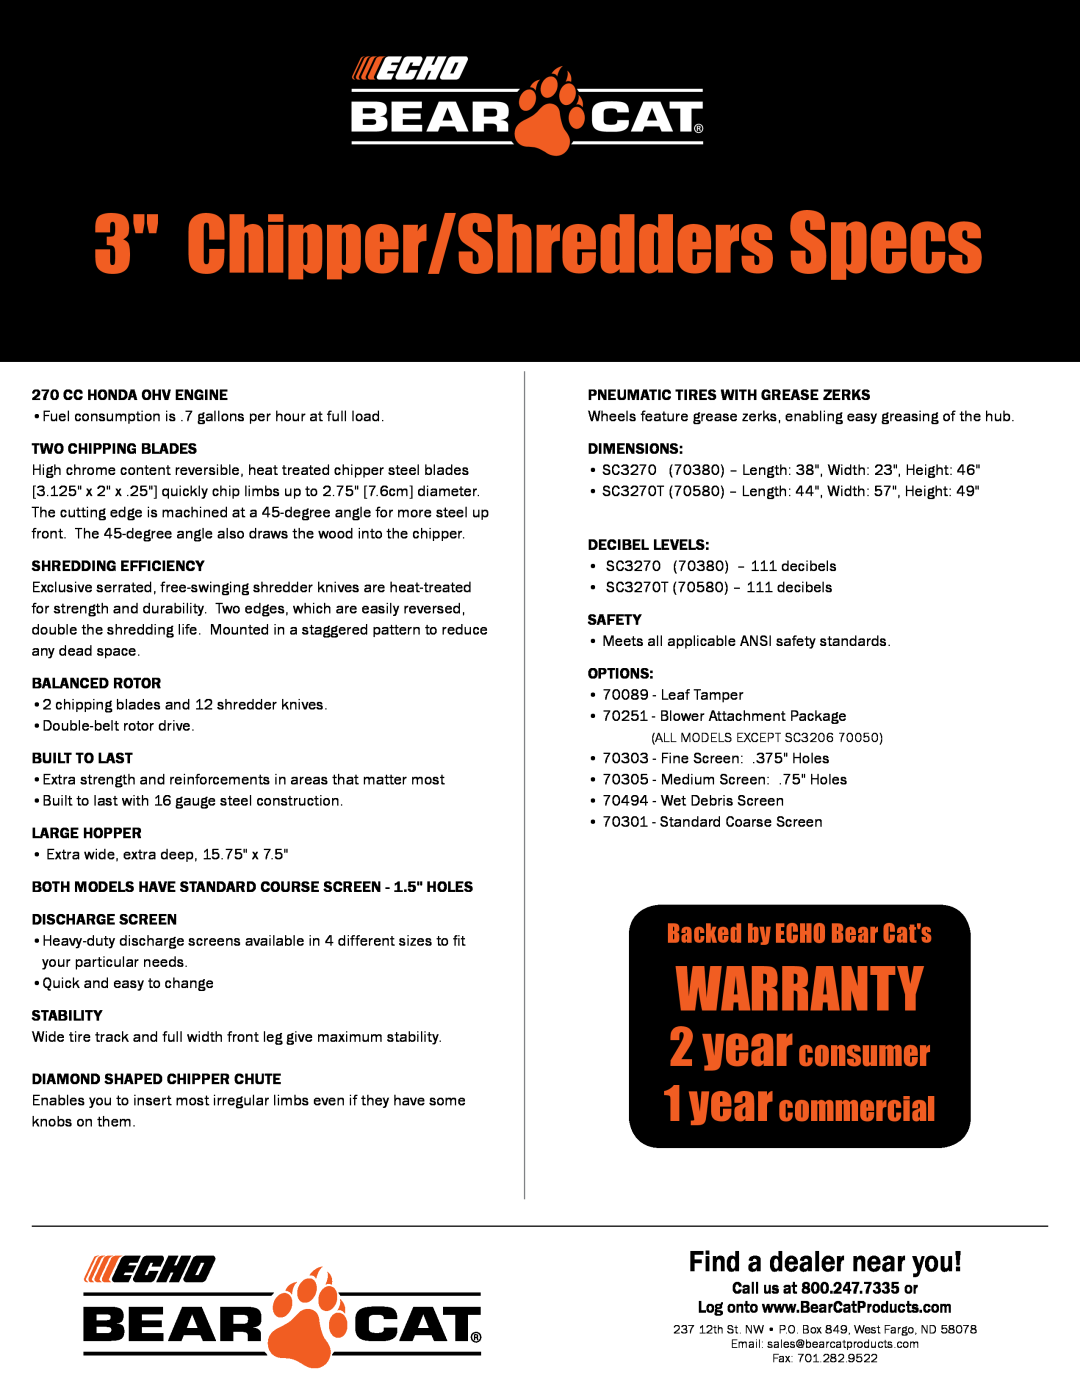 Echo Bear Cat SC3270 (70380) Chipper/Shredders Specs, Warranty, year consumer 1 year commercial, Find a dealer near you 